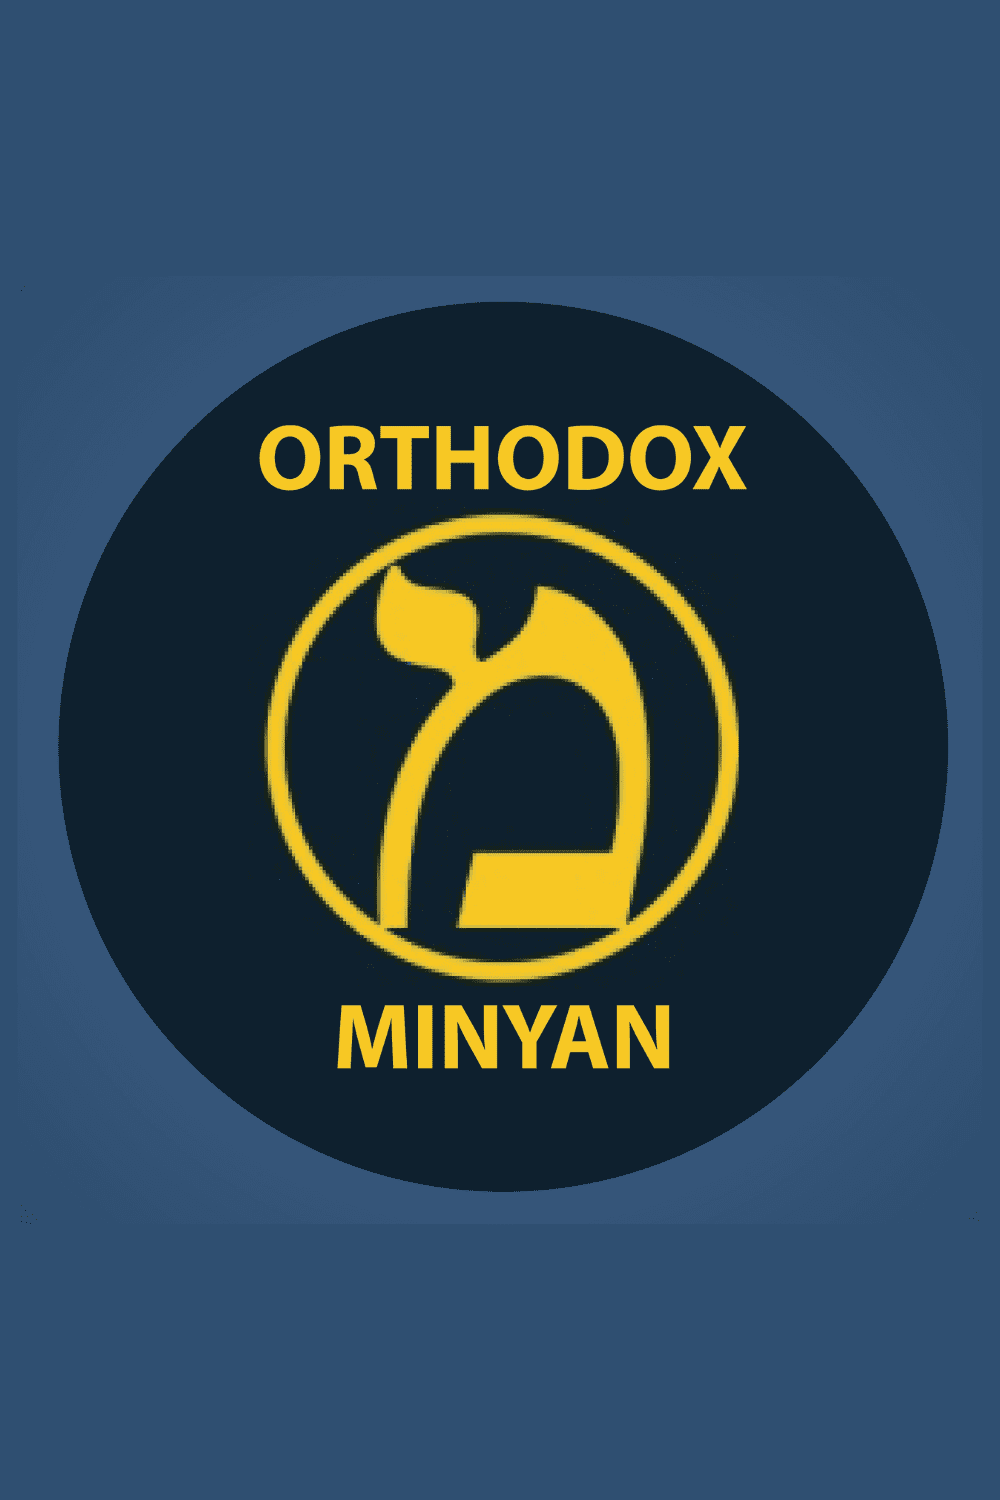 Orthodox Minyan (O-Minyan)